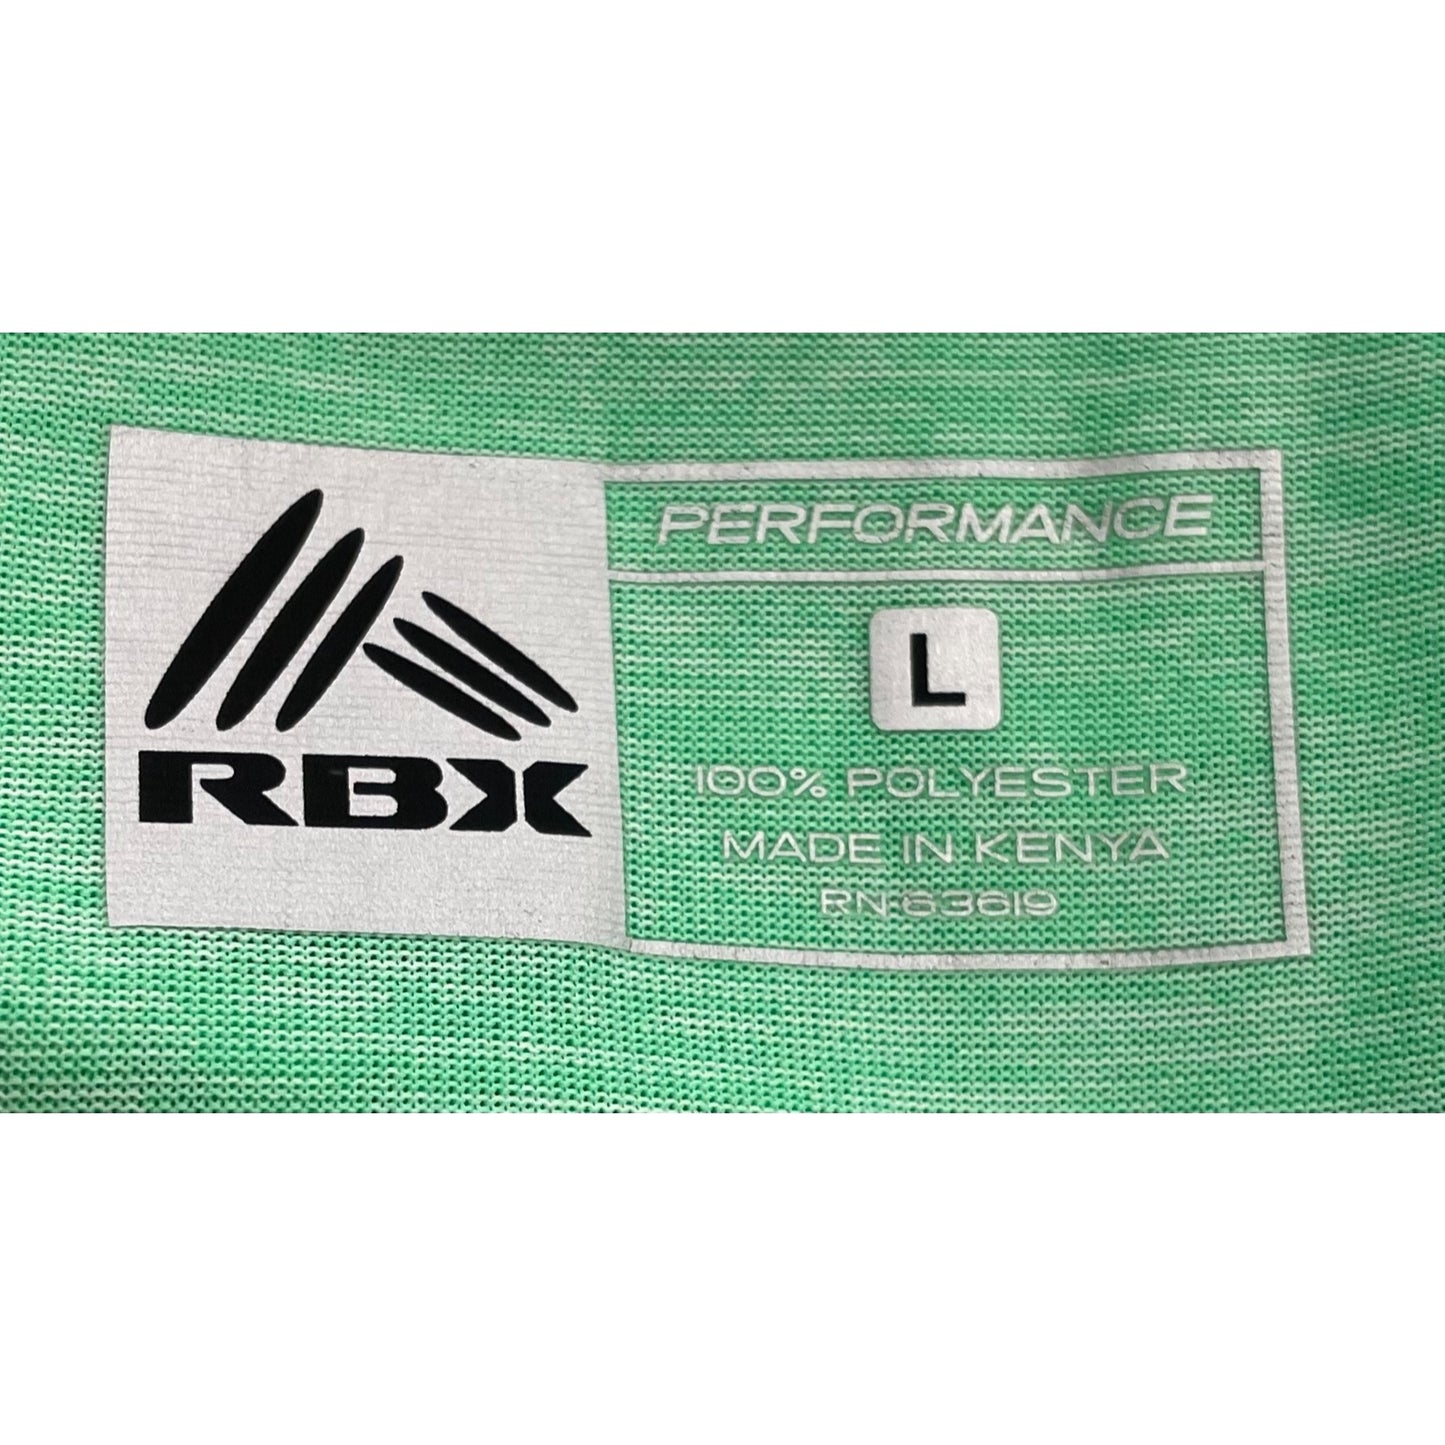 RBX Women's Size Large Seafoam/Mint Green V-Neck Long-Sleeved Workout Top